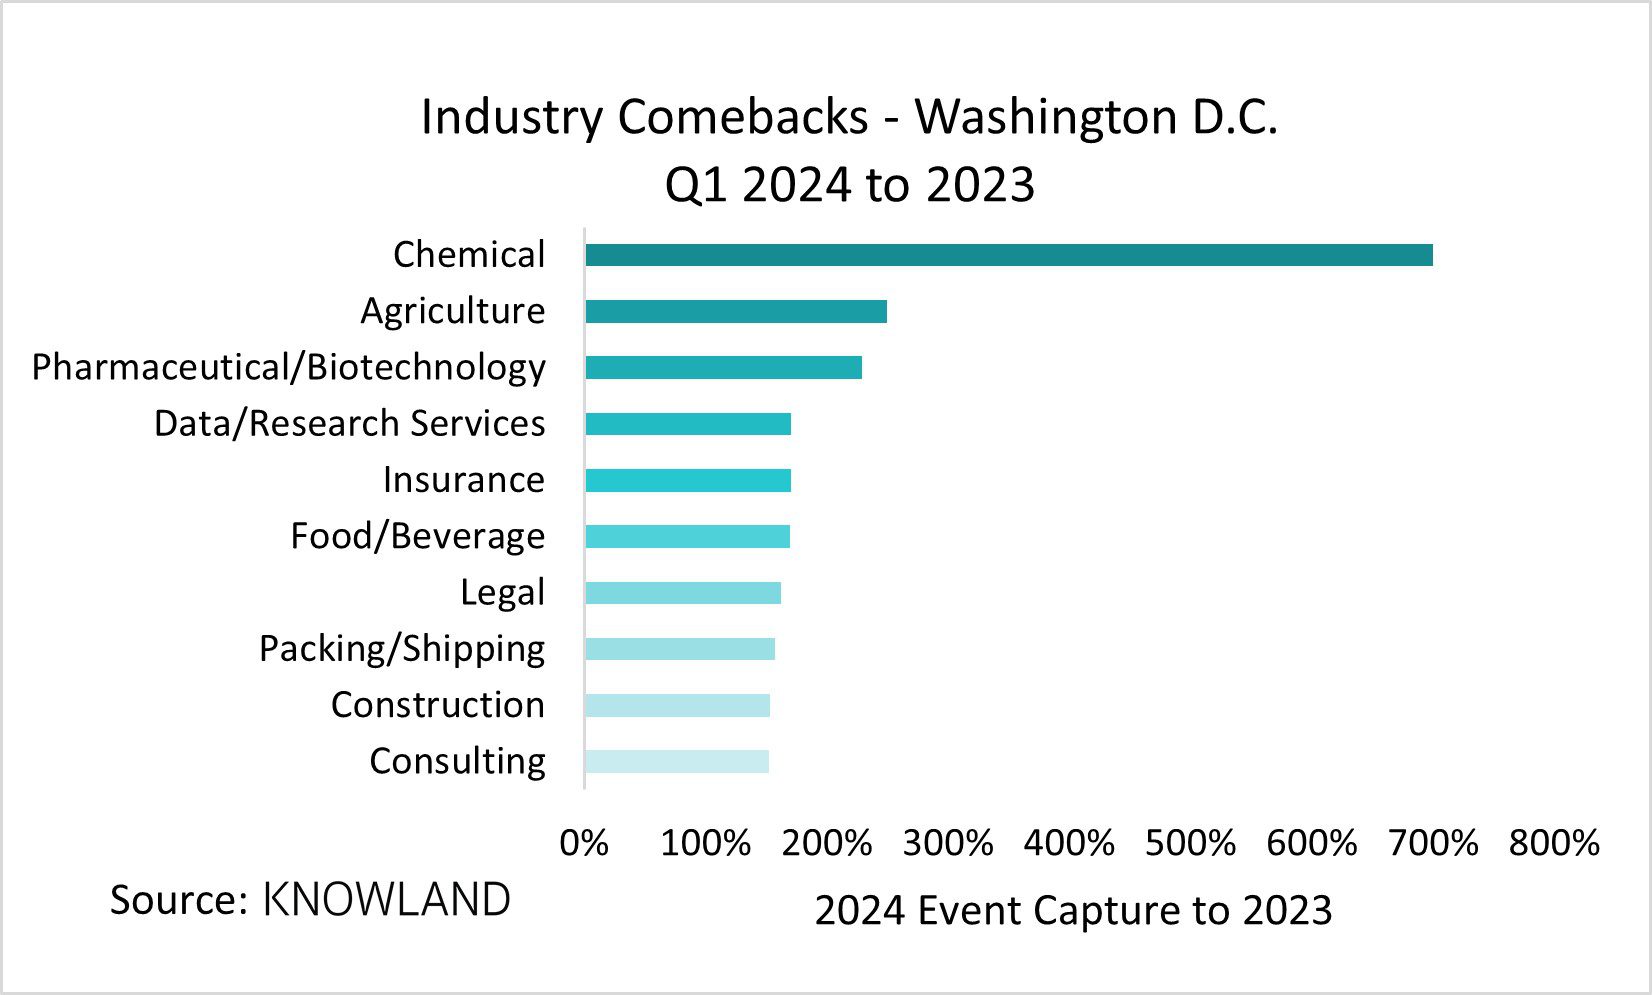 Biggest industry comebacks meeting in Washington DC in Q1 2024.